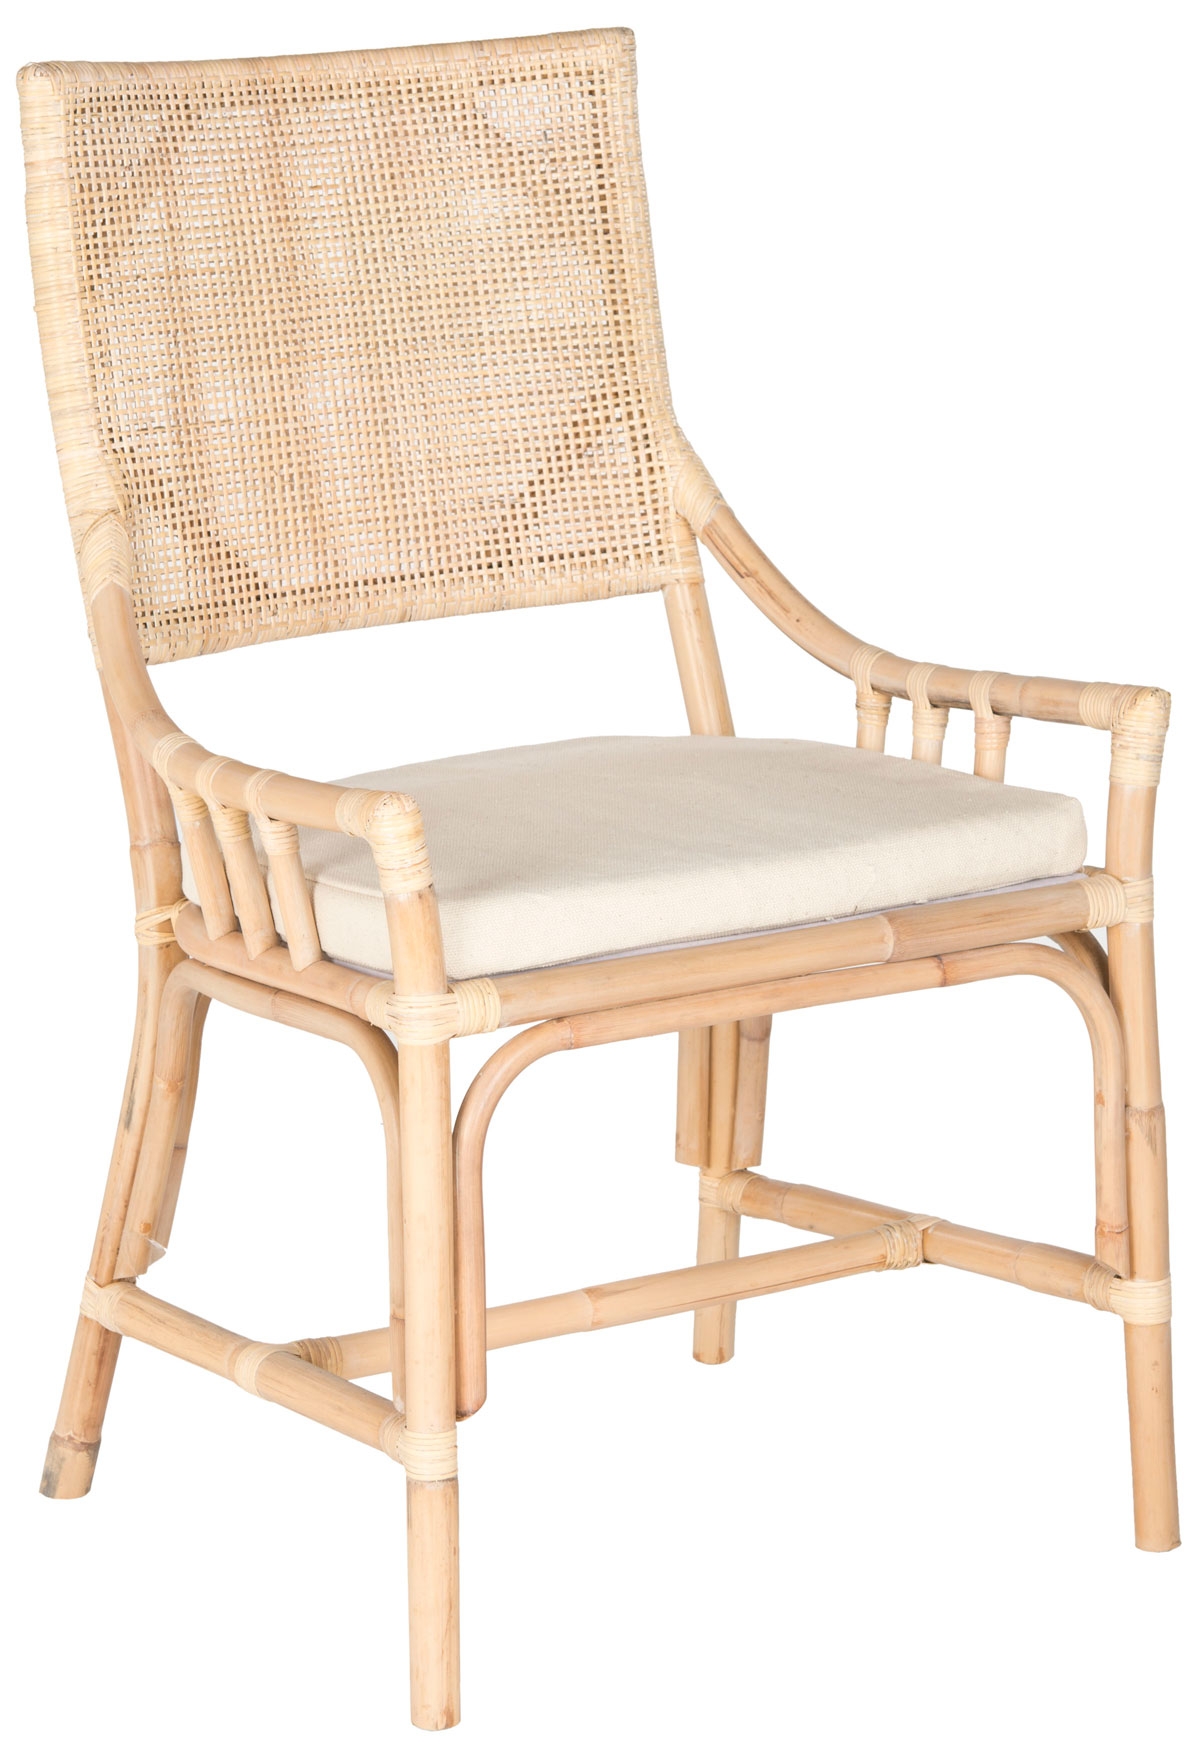 Donatella Rattan Chair - Natural White Wash - Safavieh - Image 2